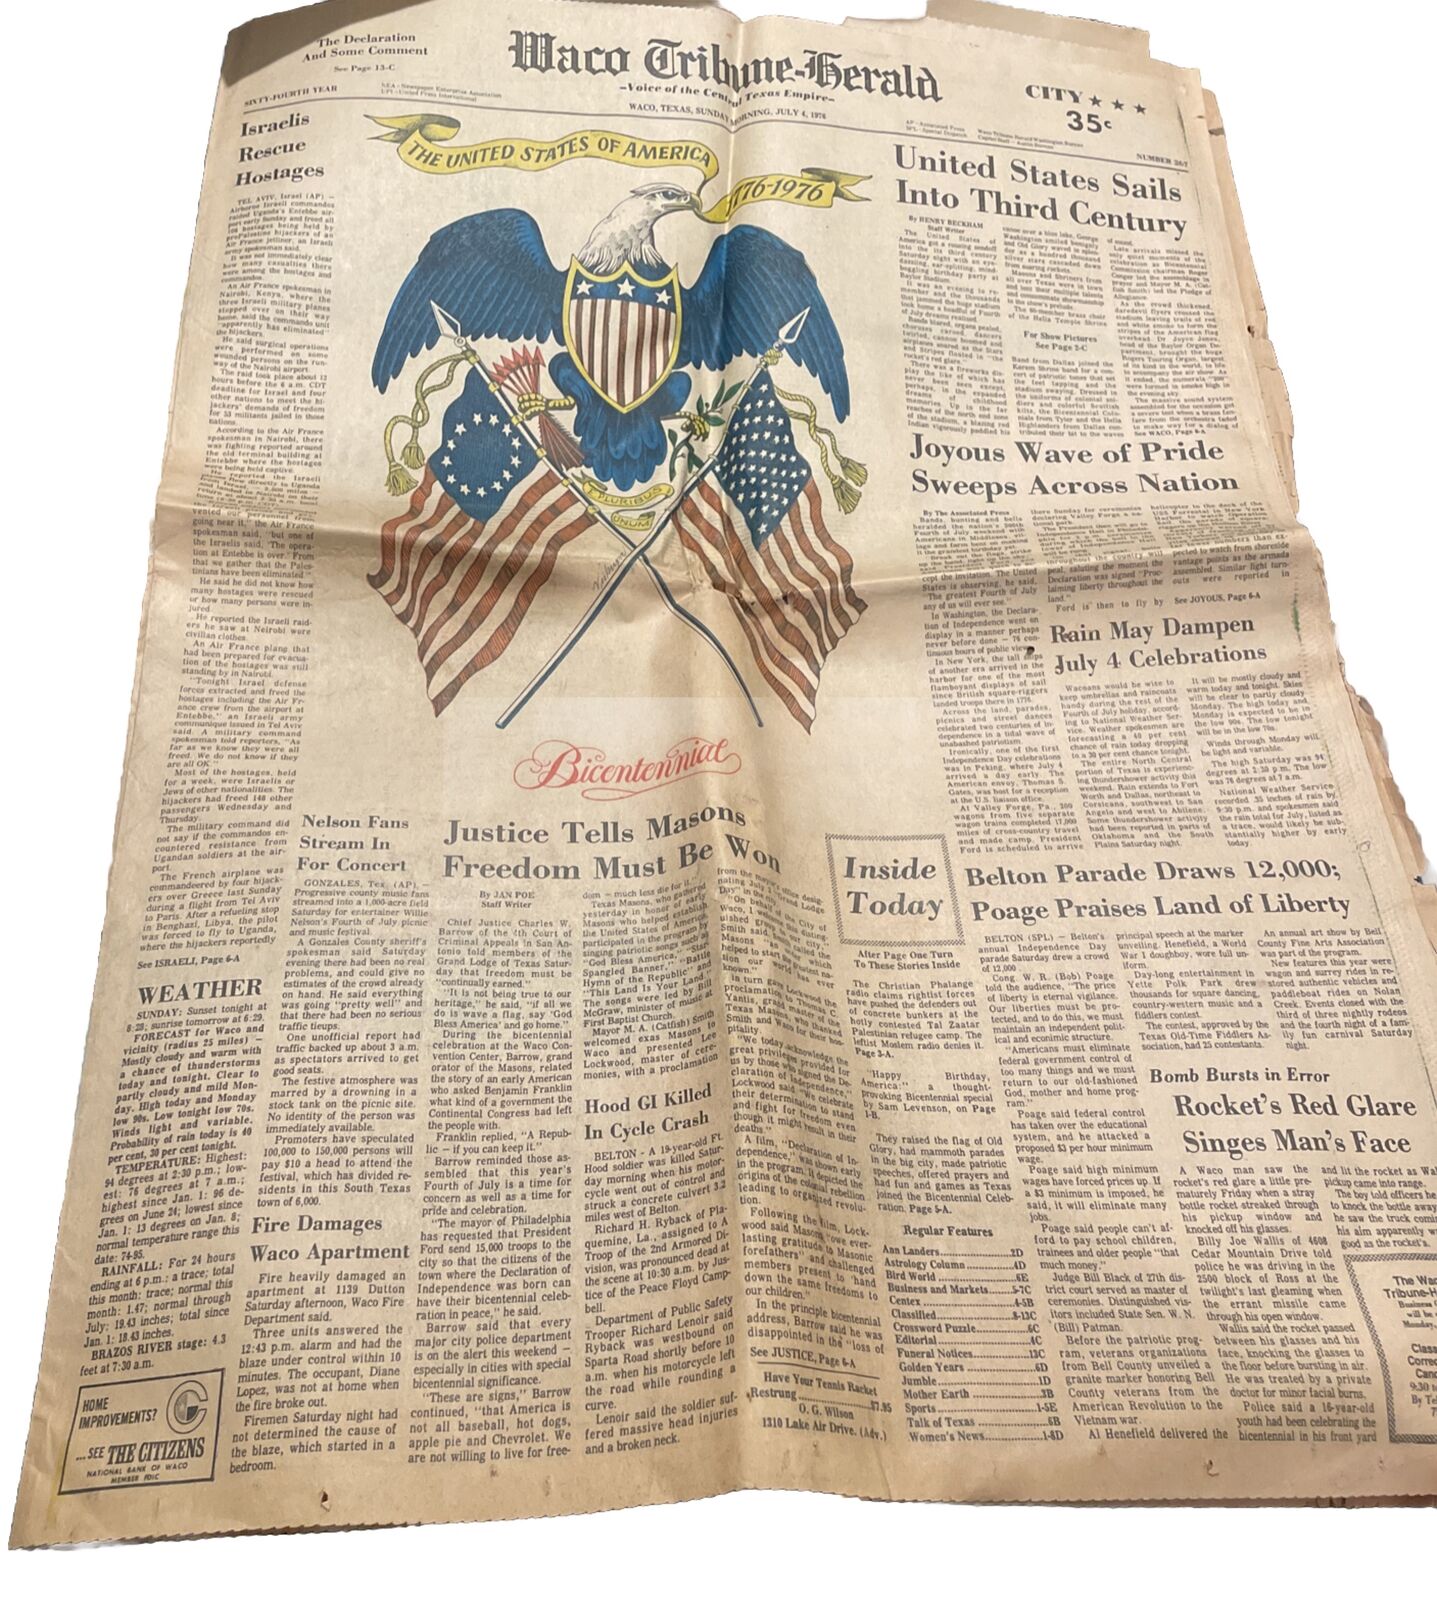 July 4, 1976 Bicentennial Waco Tribune Herald Newspaper Complete Sections